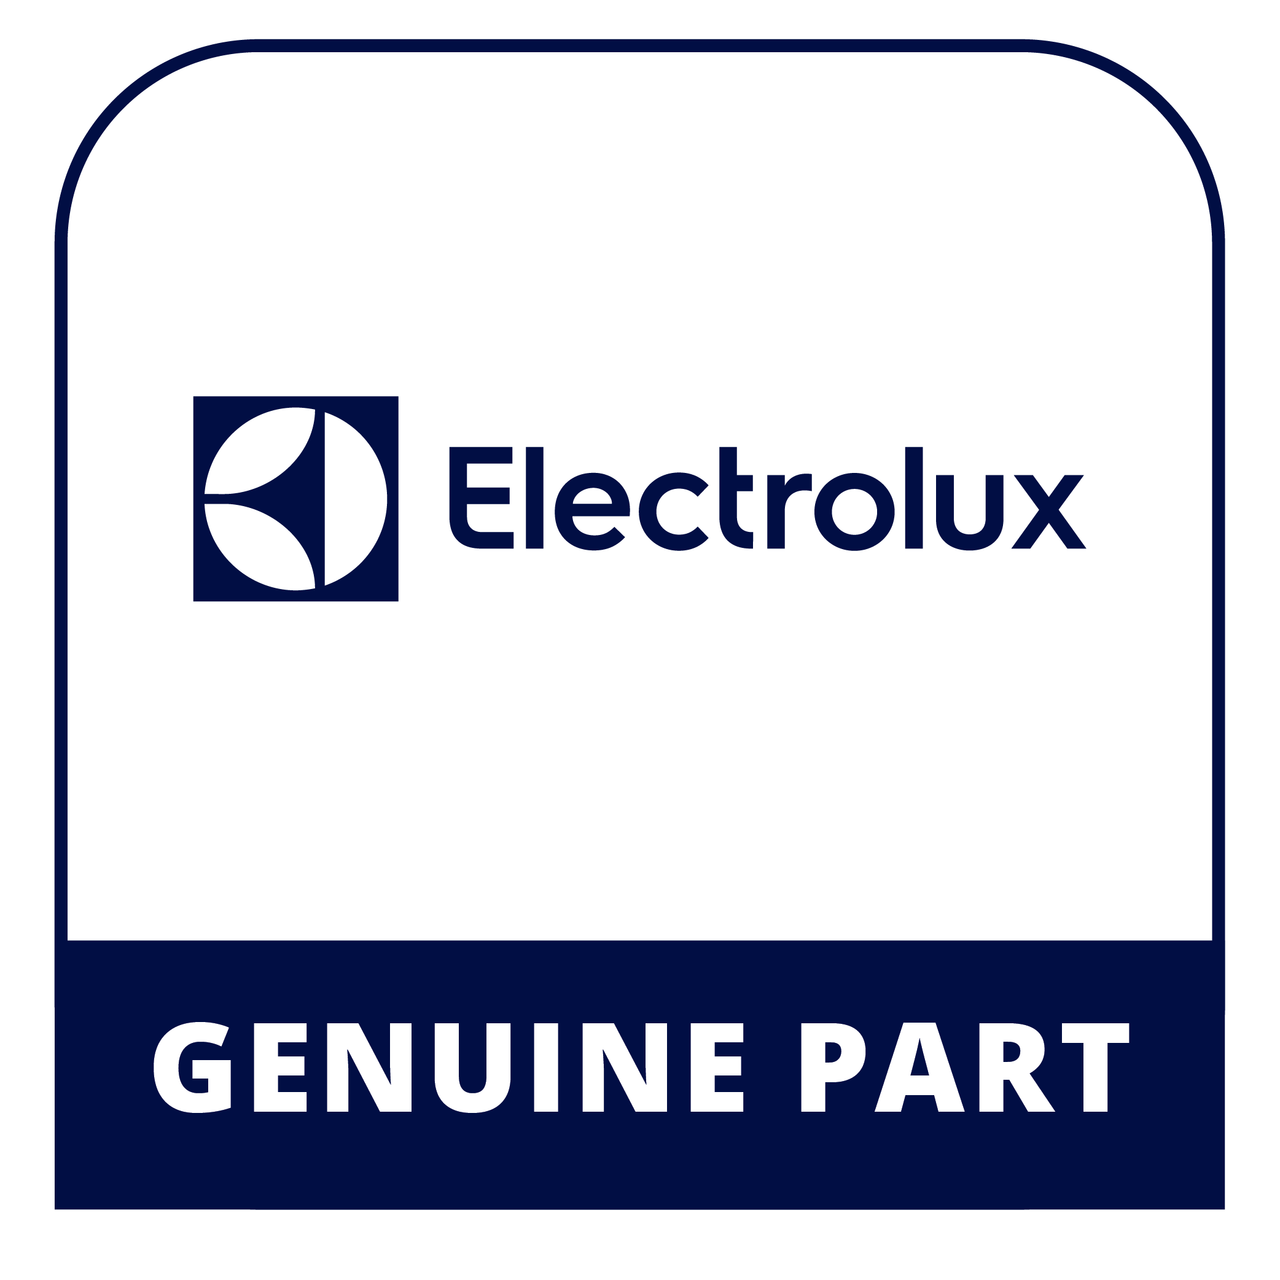 Frigidaire - Electrolux 318413609 Label-Nameplate - Genuine Electrolux Part